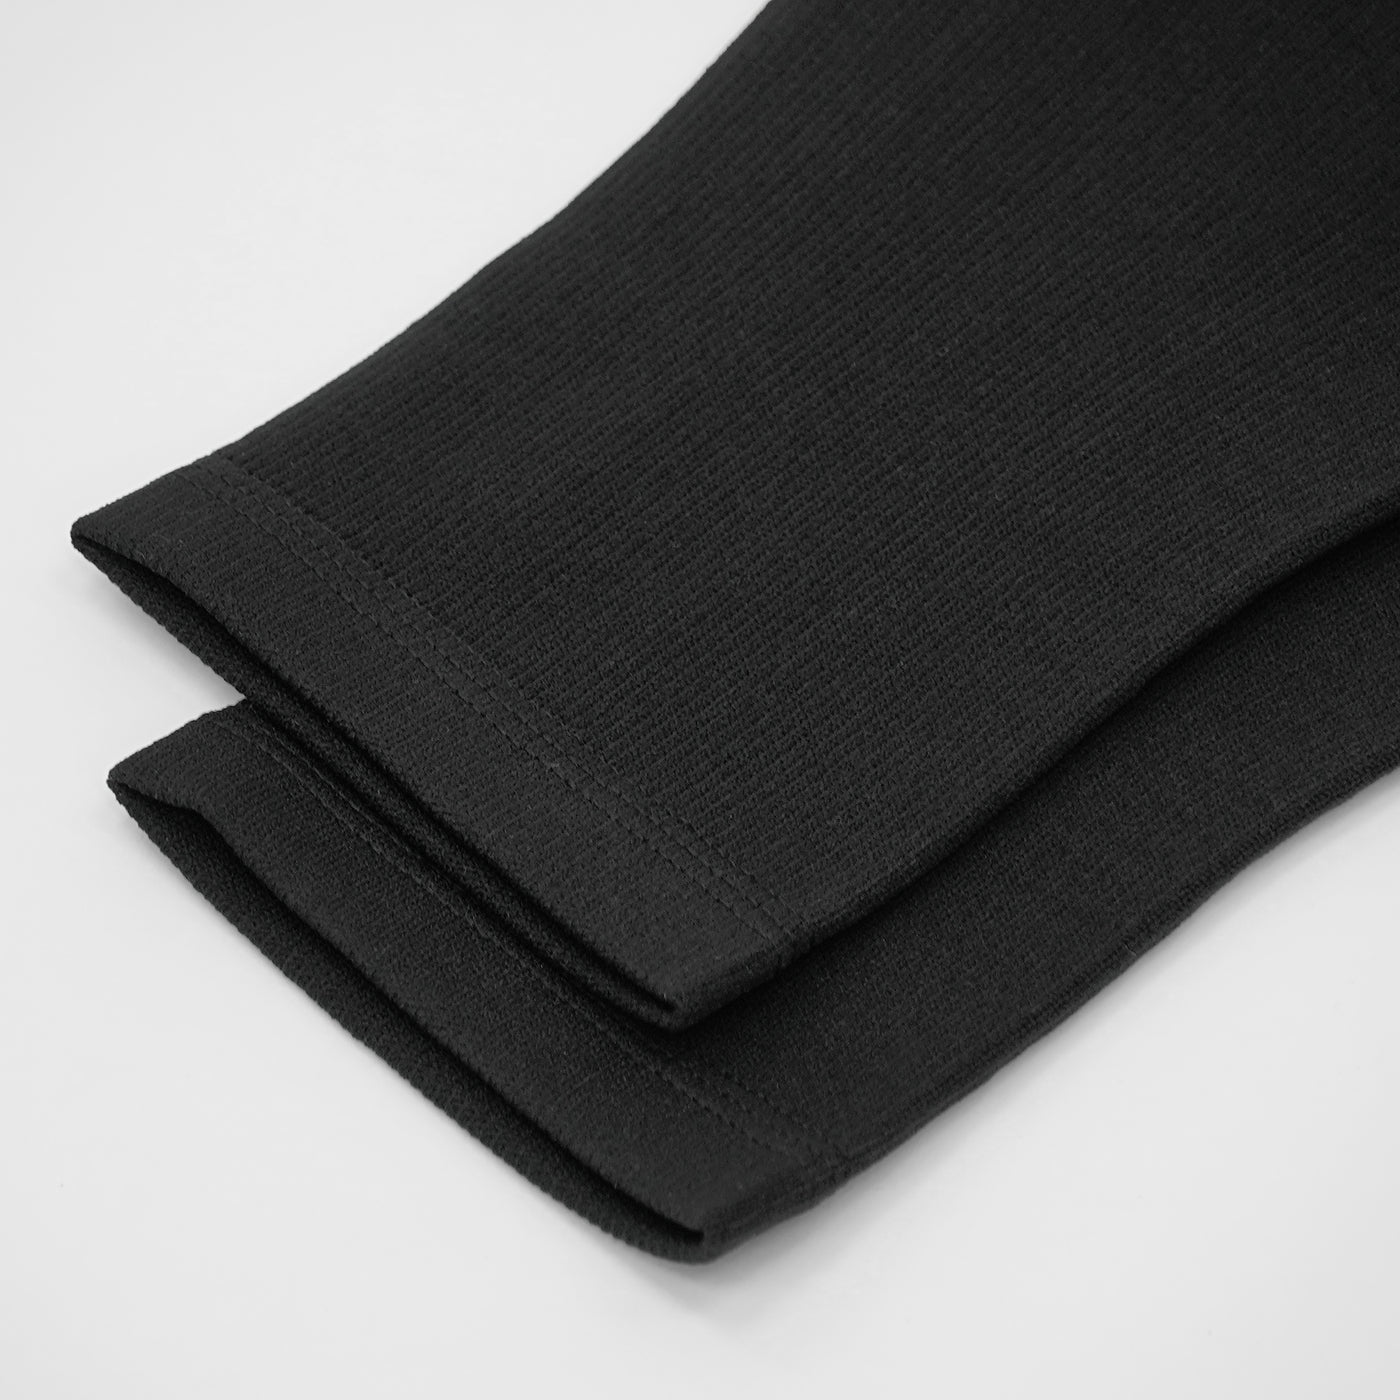 Lineman Black Knitted Compression Calf Sleeves - Big